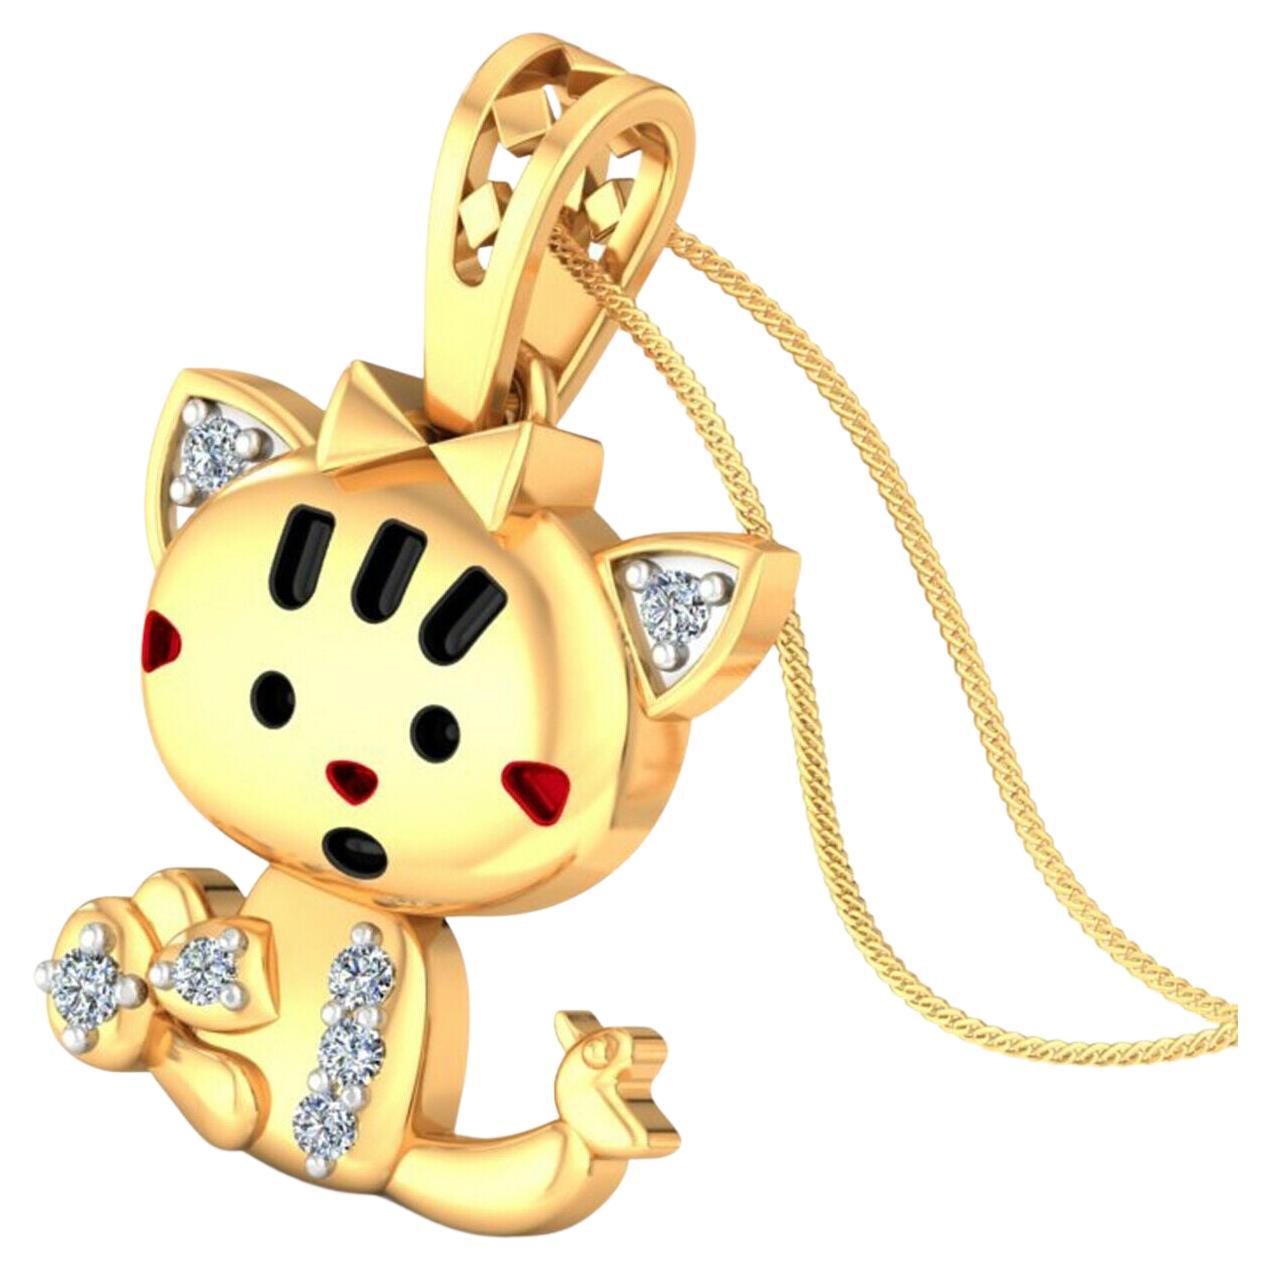 Collier pendentif breloque Hello Kitty en or 14 carats et émail avec diamants